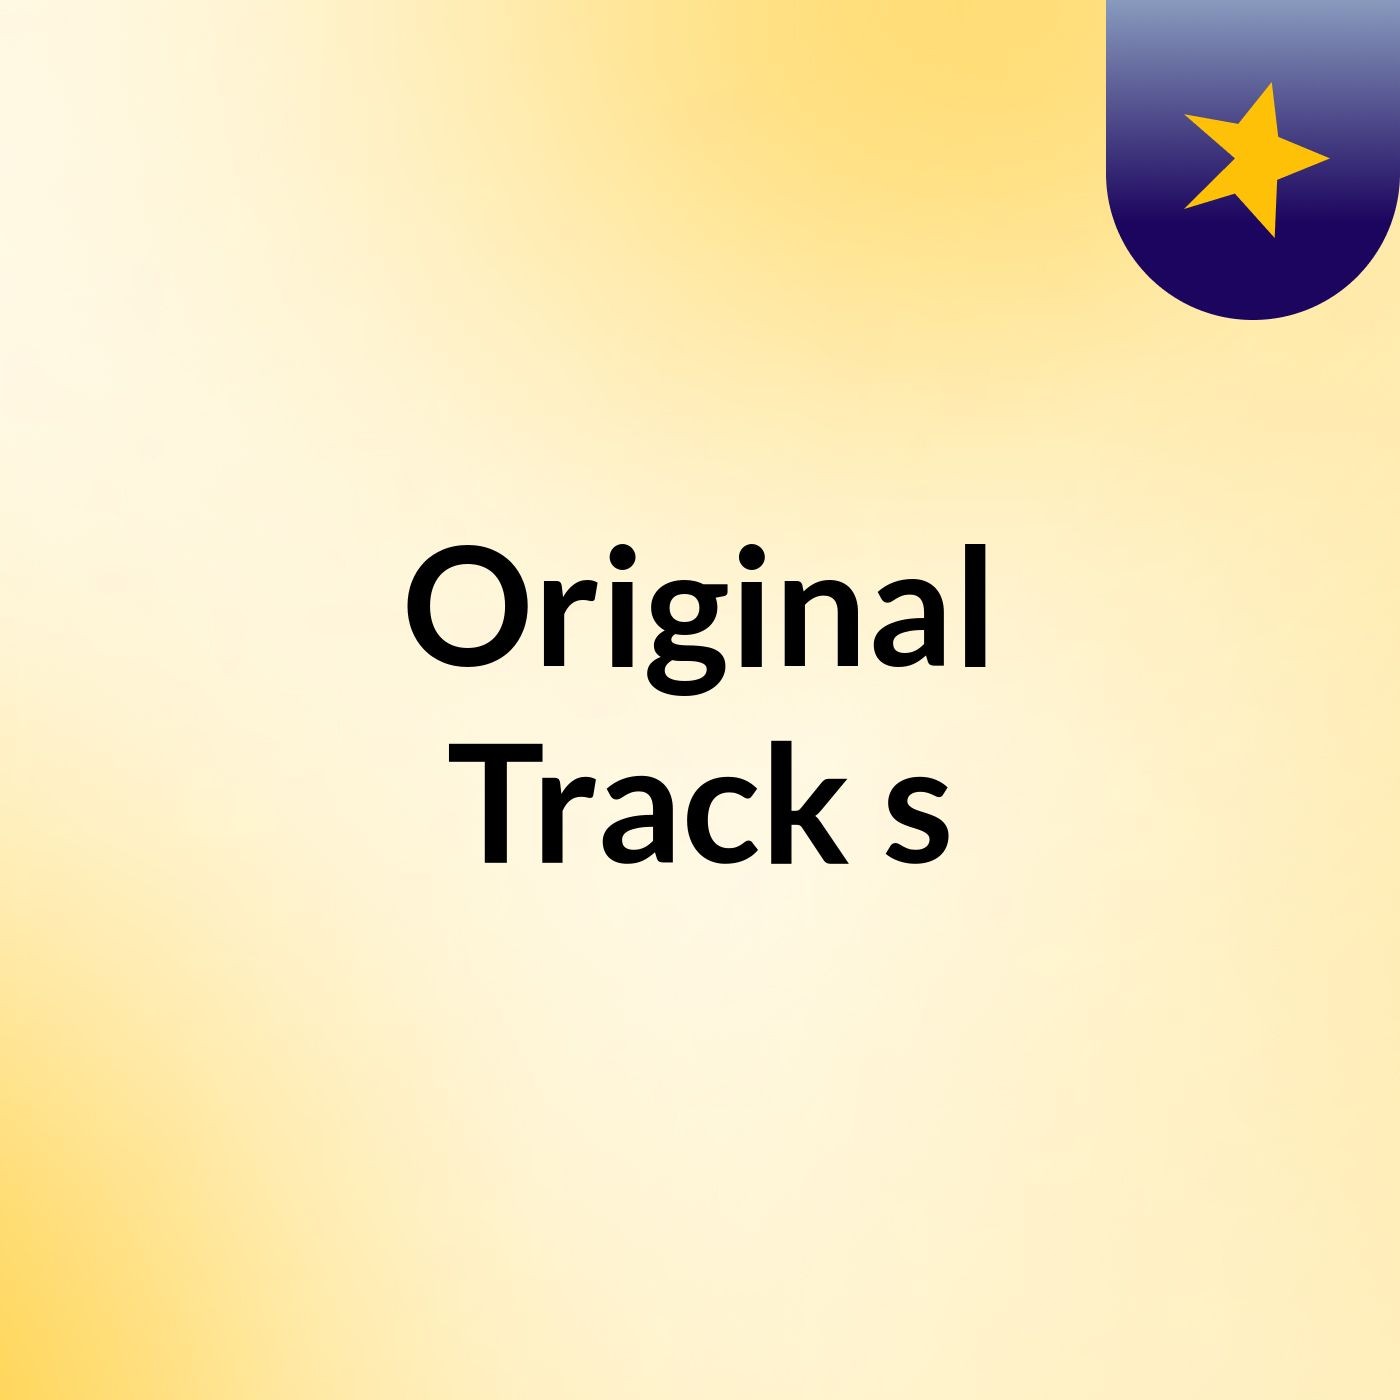 Original Track's